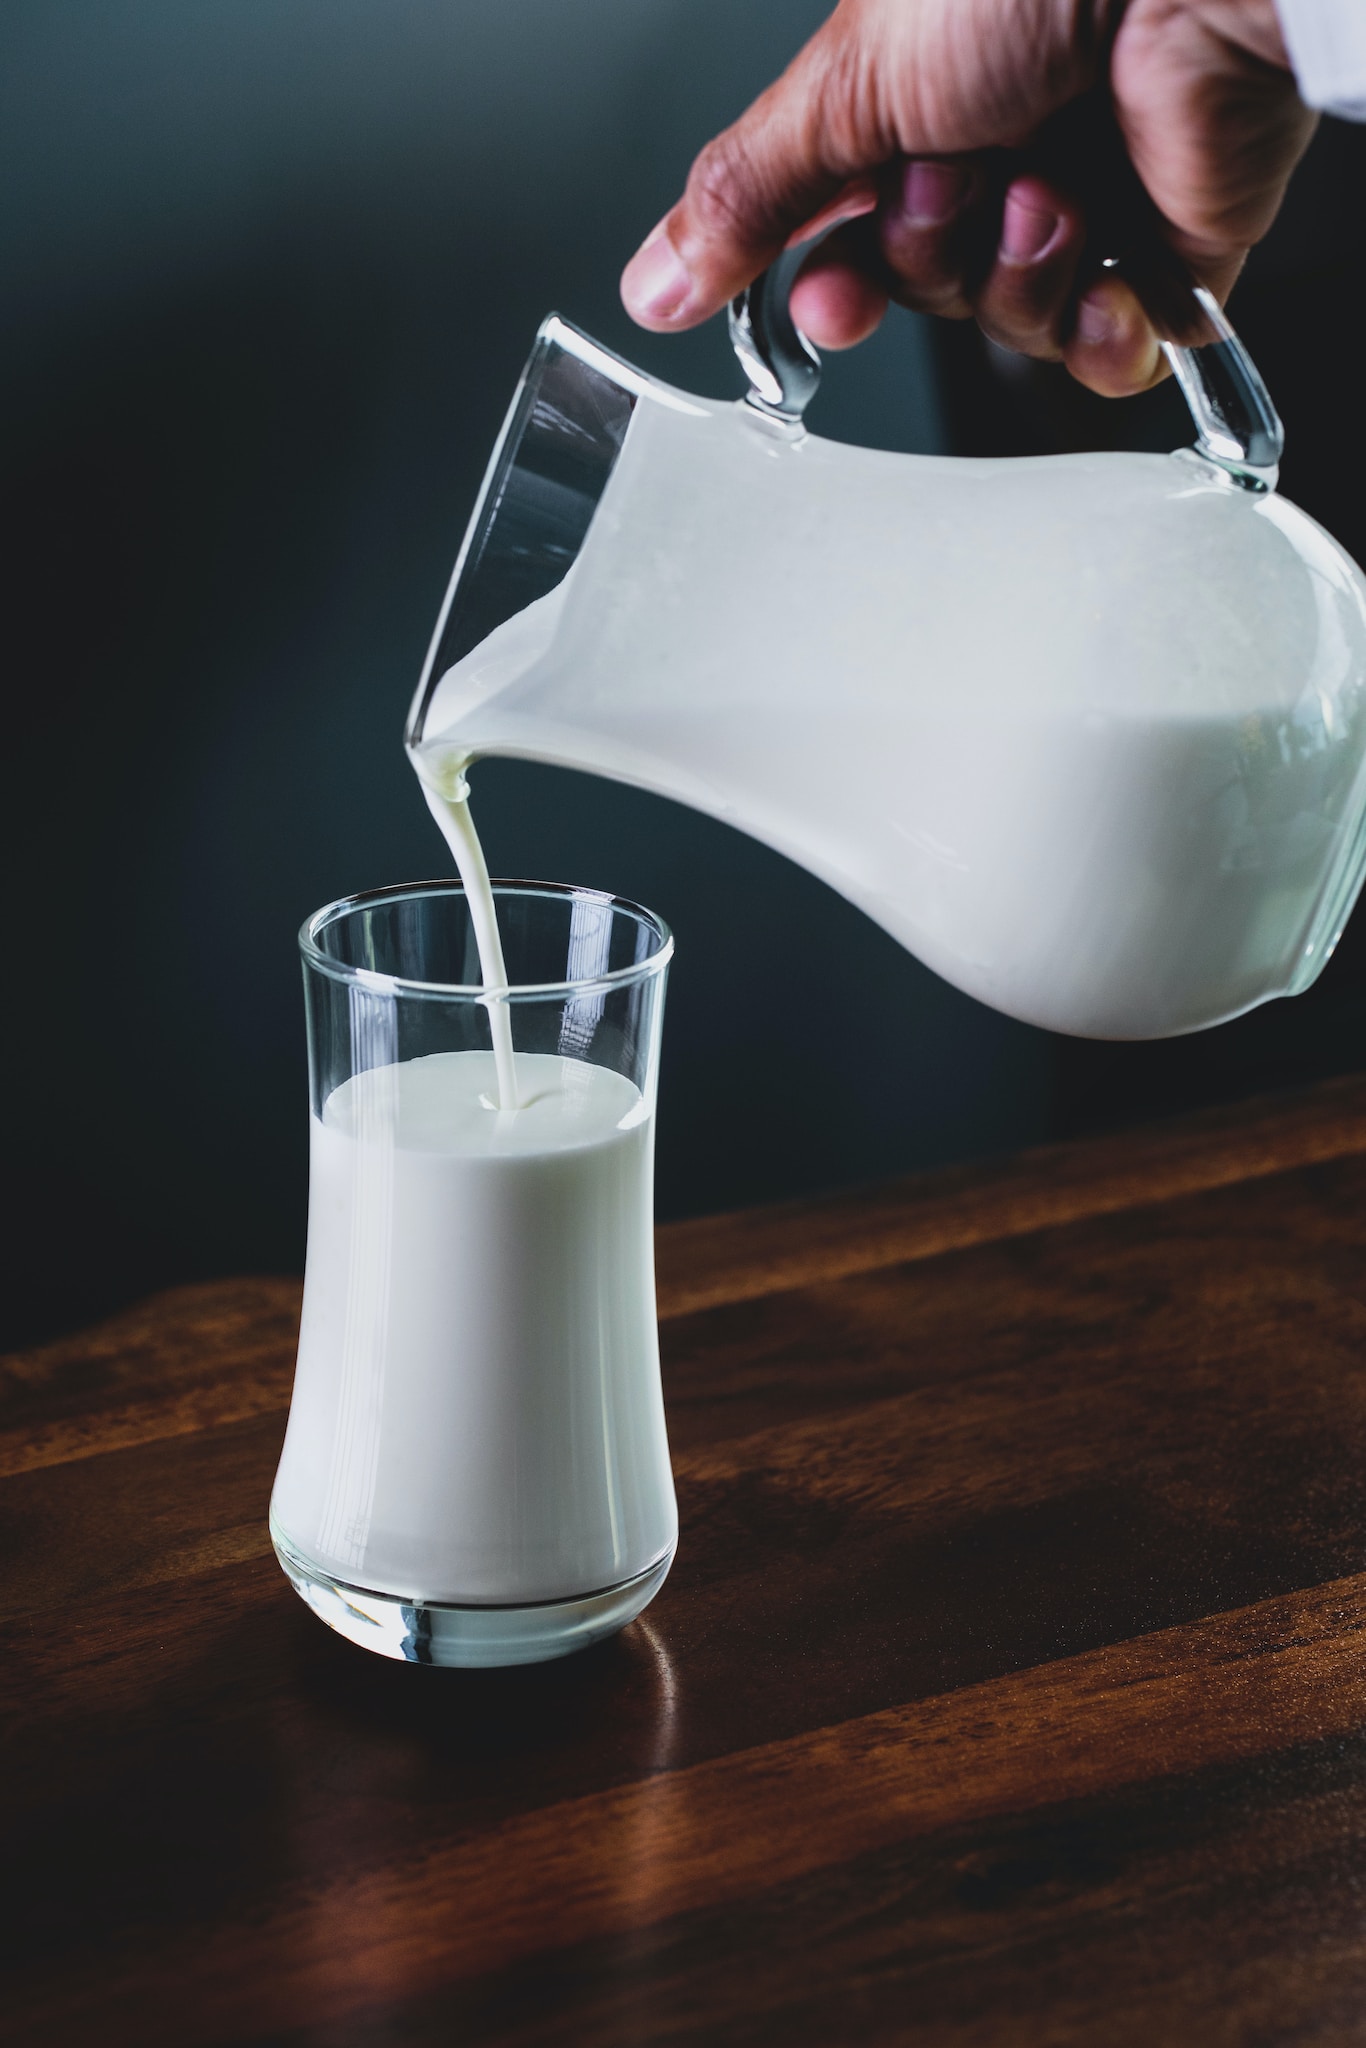 As us milk sales rise amid pandemic got milk ads return